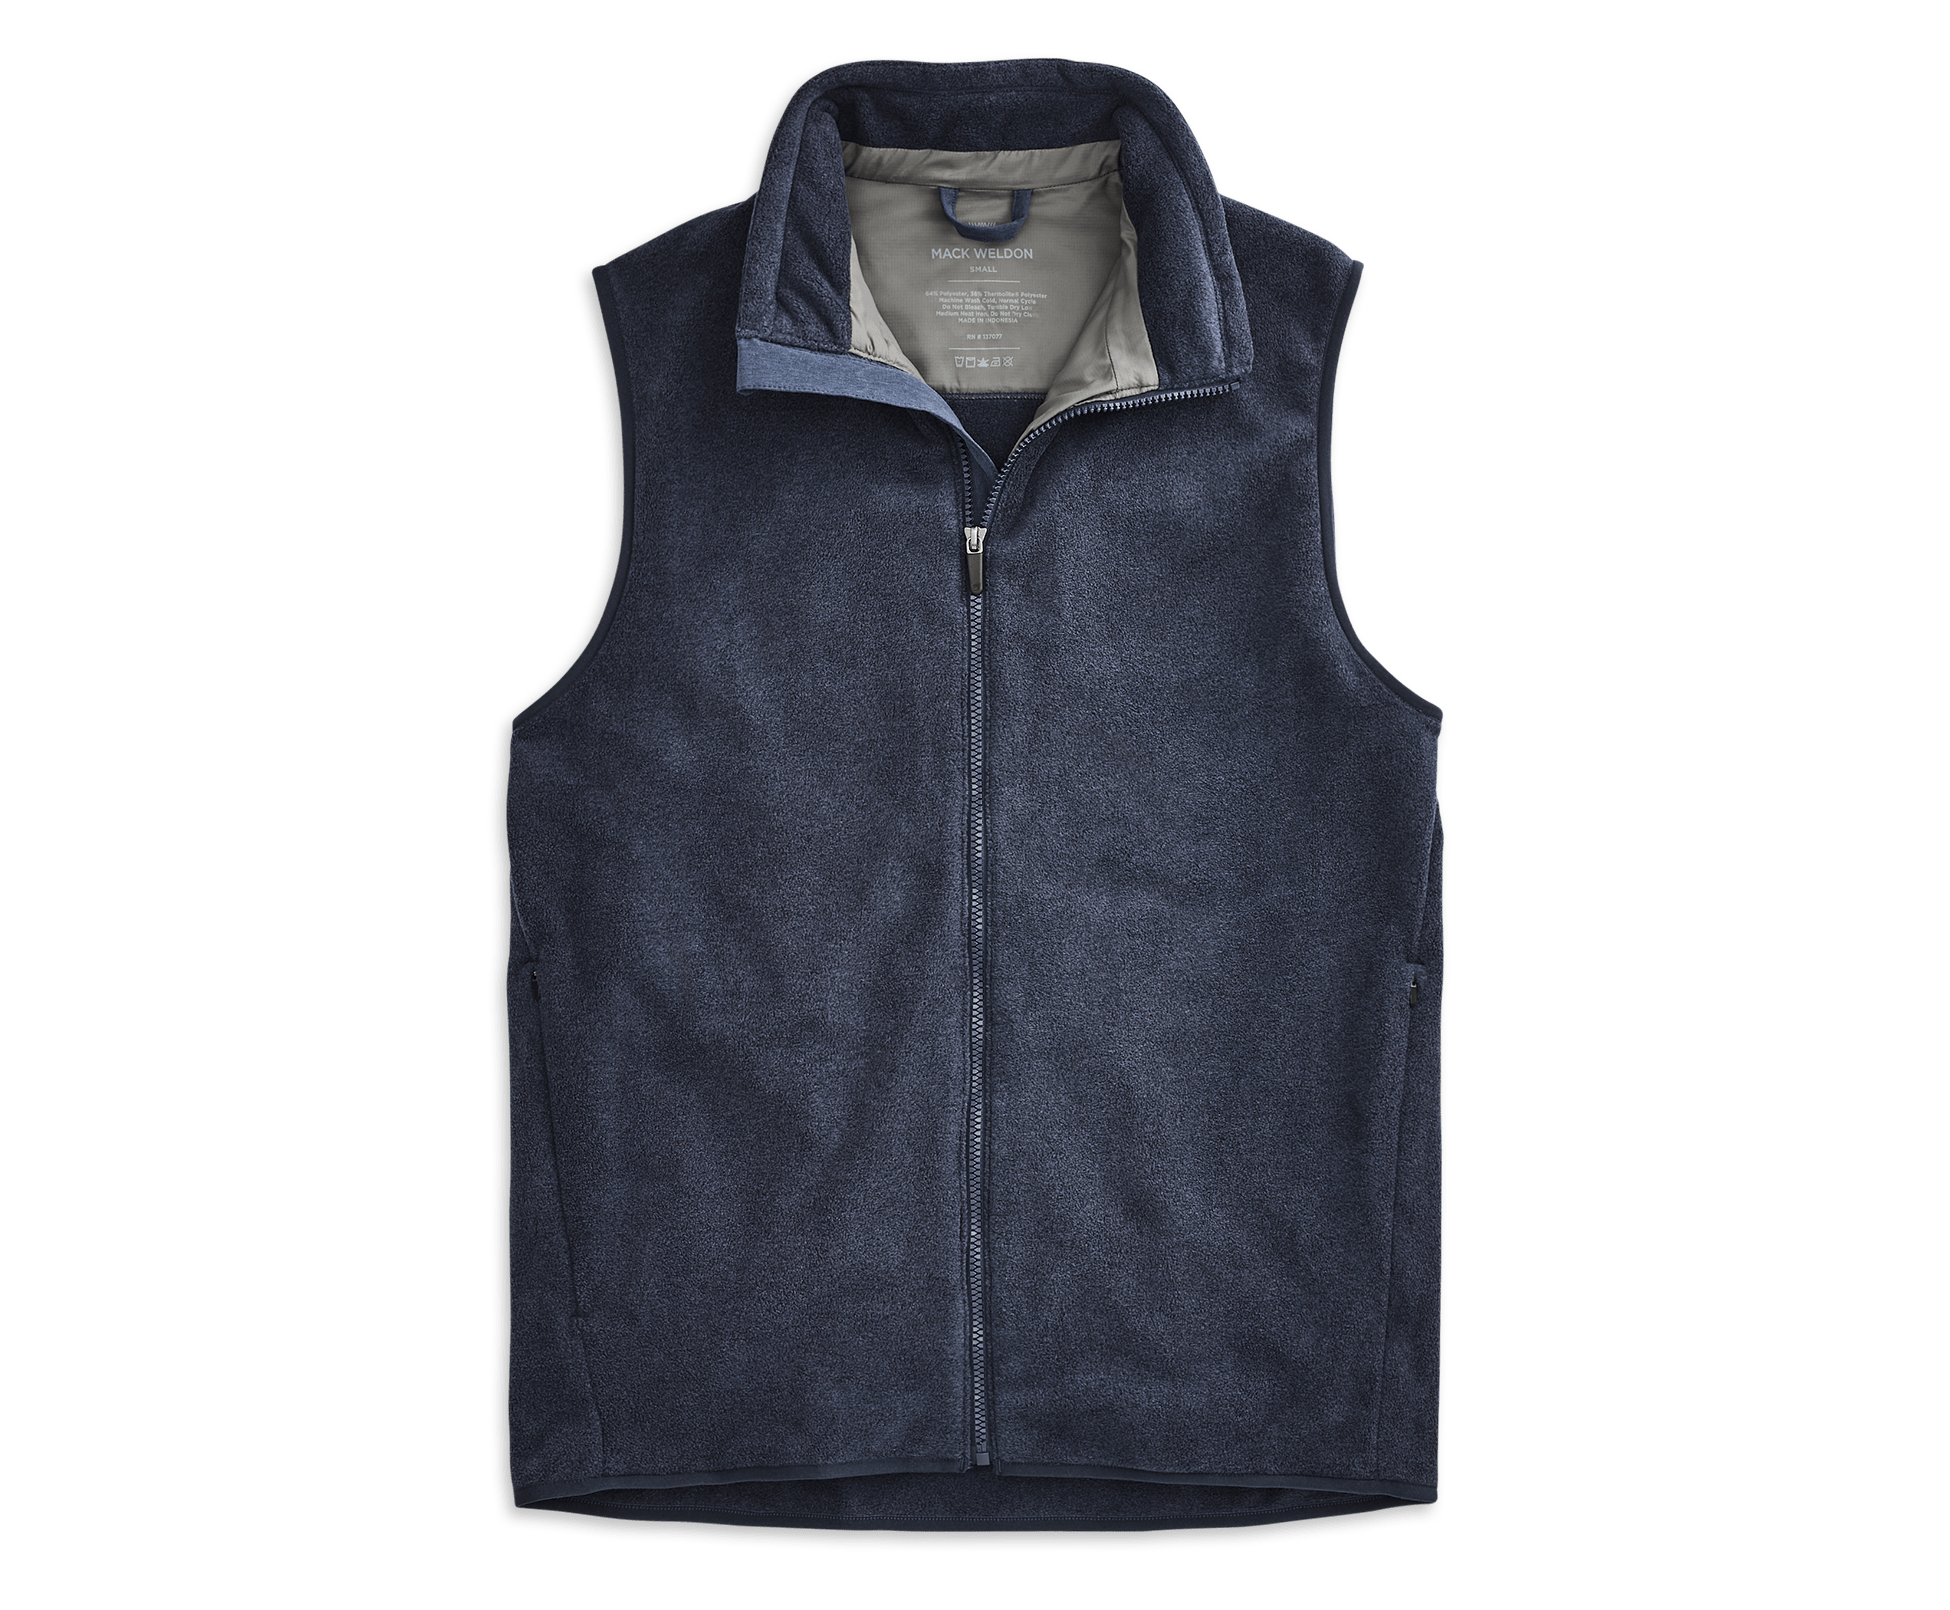 Can You Tumble Dry a Fleece Jacket?